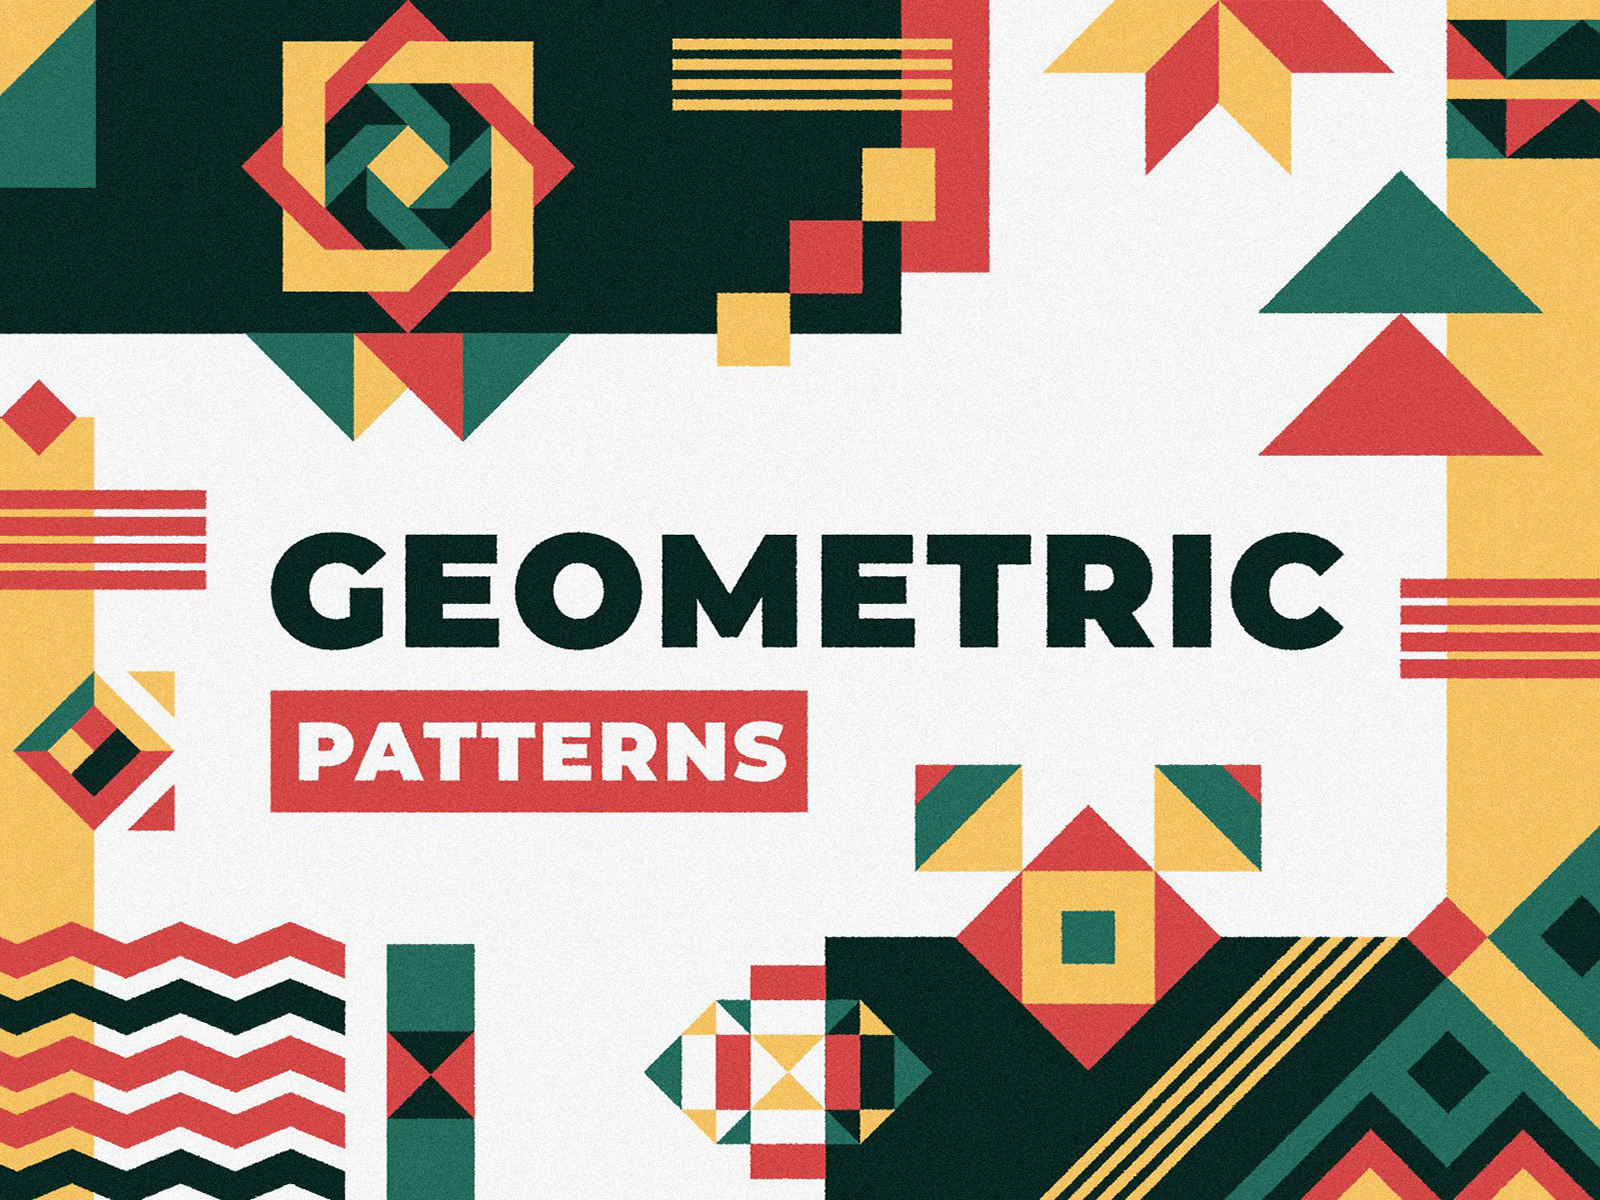 Portuguese Geometric Patterns by Anna Tikhomirova for Pixelbuddha on ...